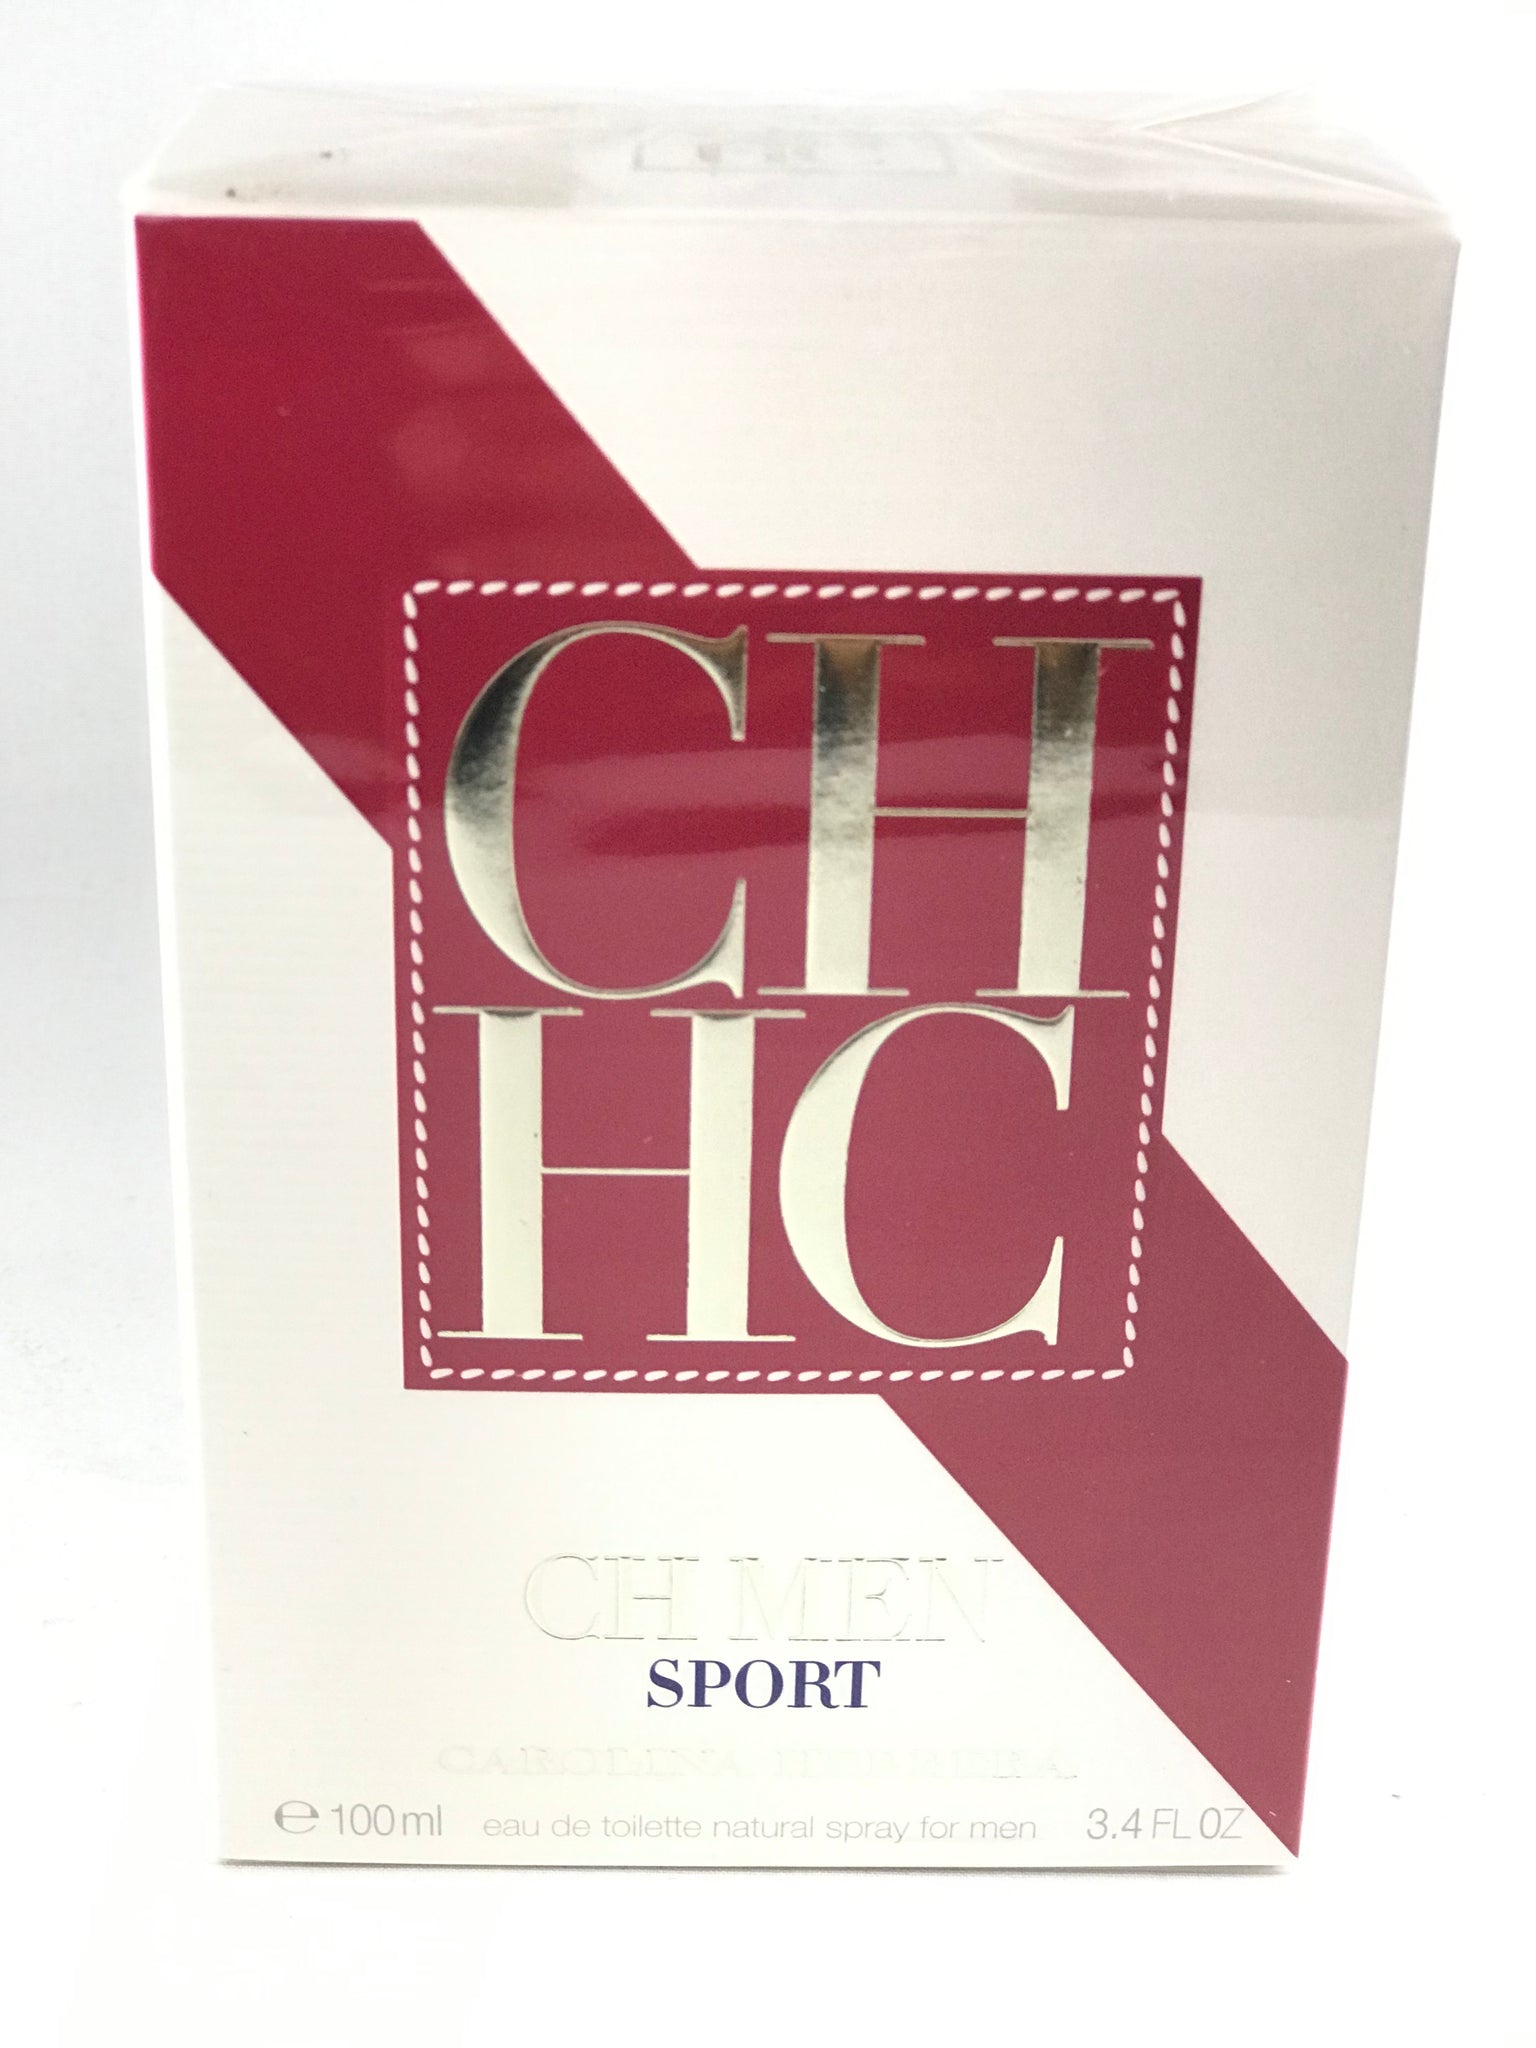 CH MEN Toilette gifts perfumes de special always Eau 3.4oz & Carolina – Herrera SPORT